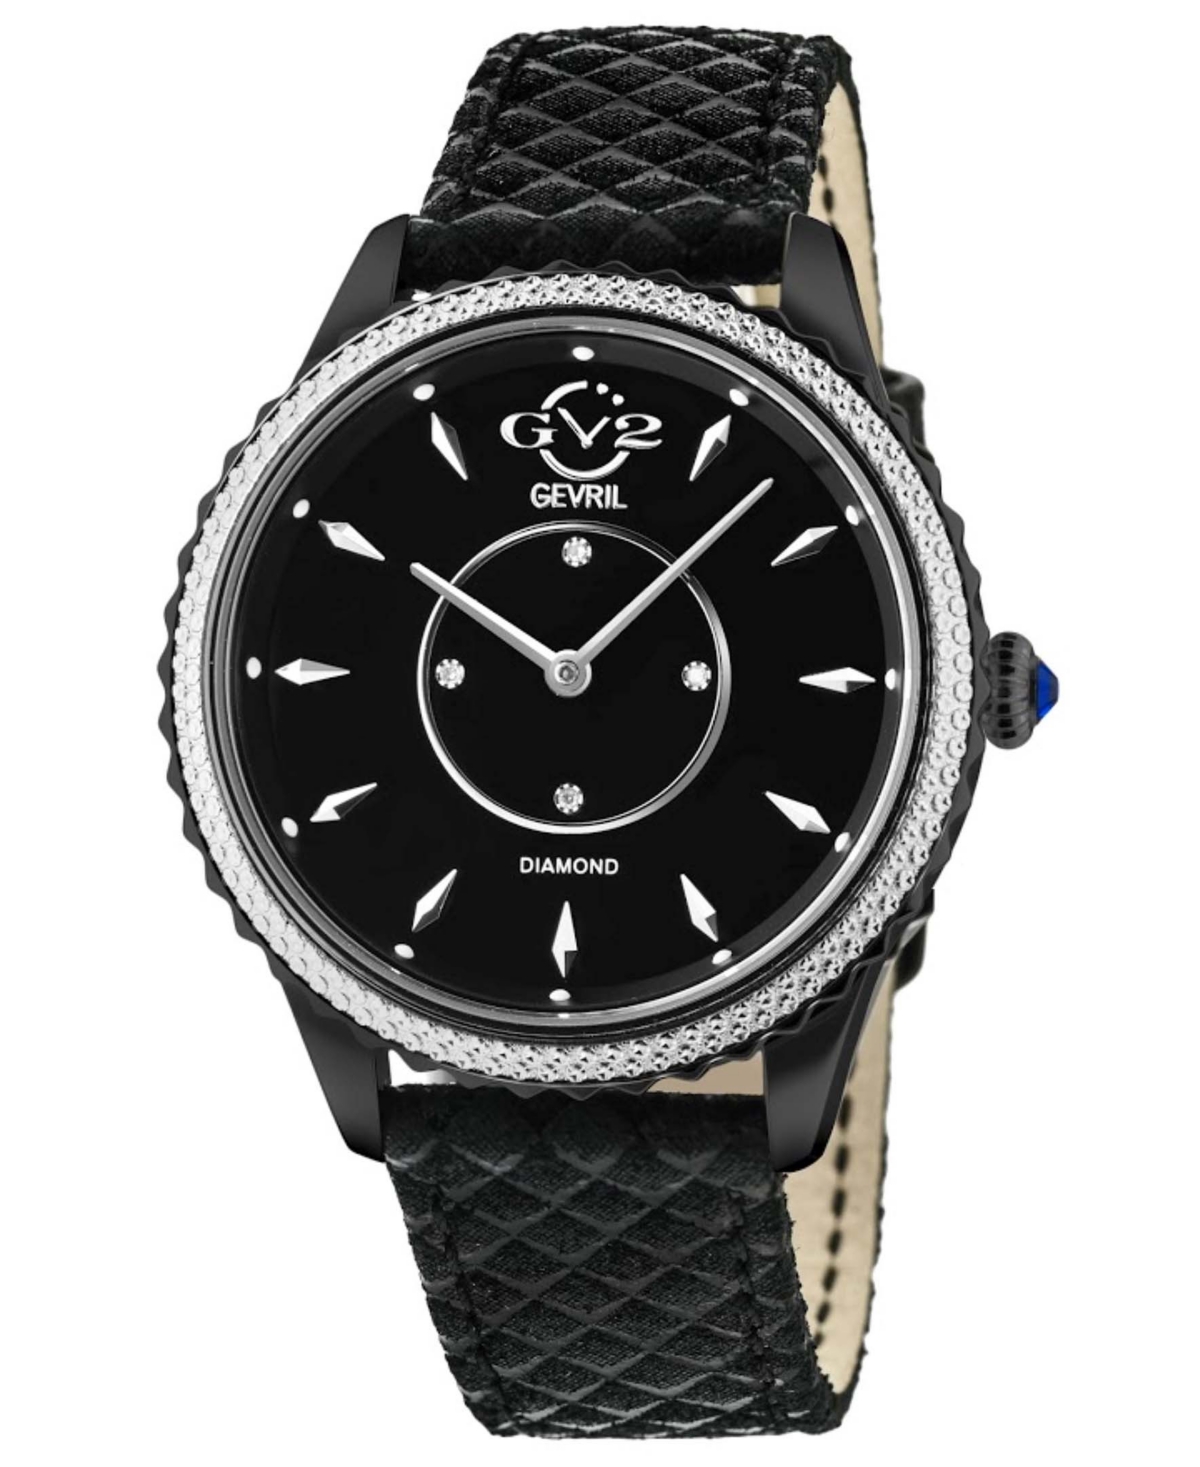 Gv2 By Gevril Women's Swiss Quartz Siena Black Leather Watch 38mm